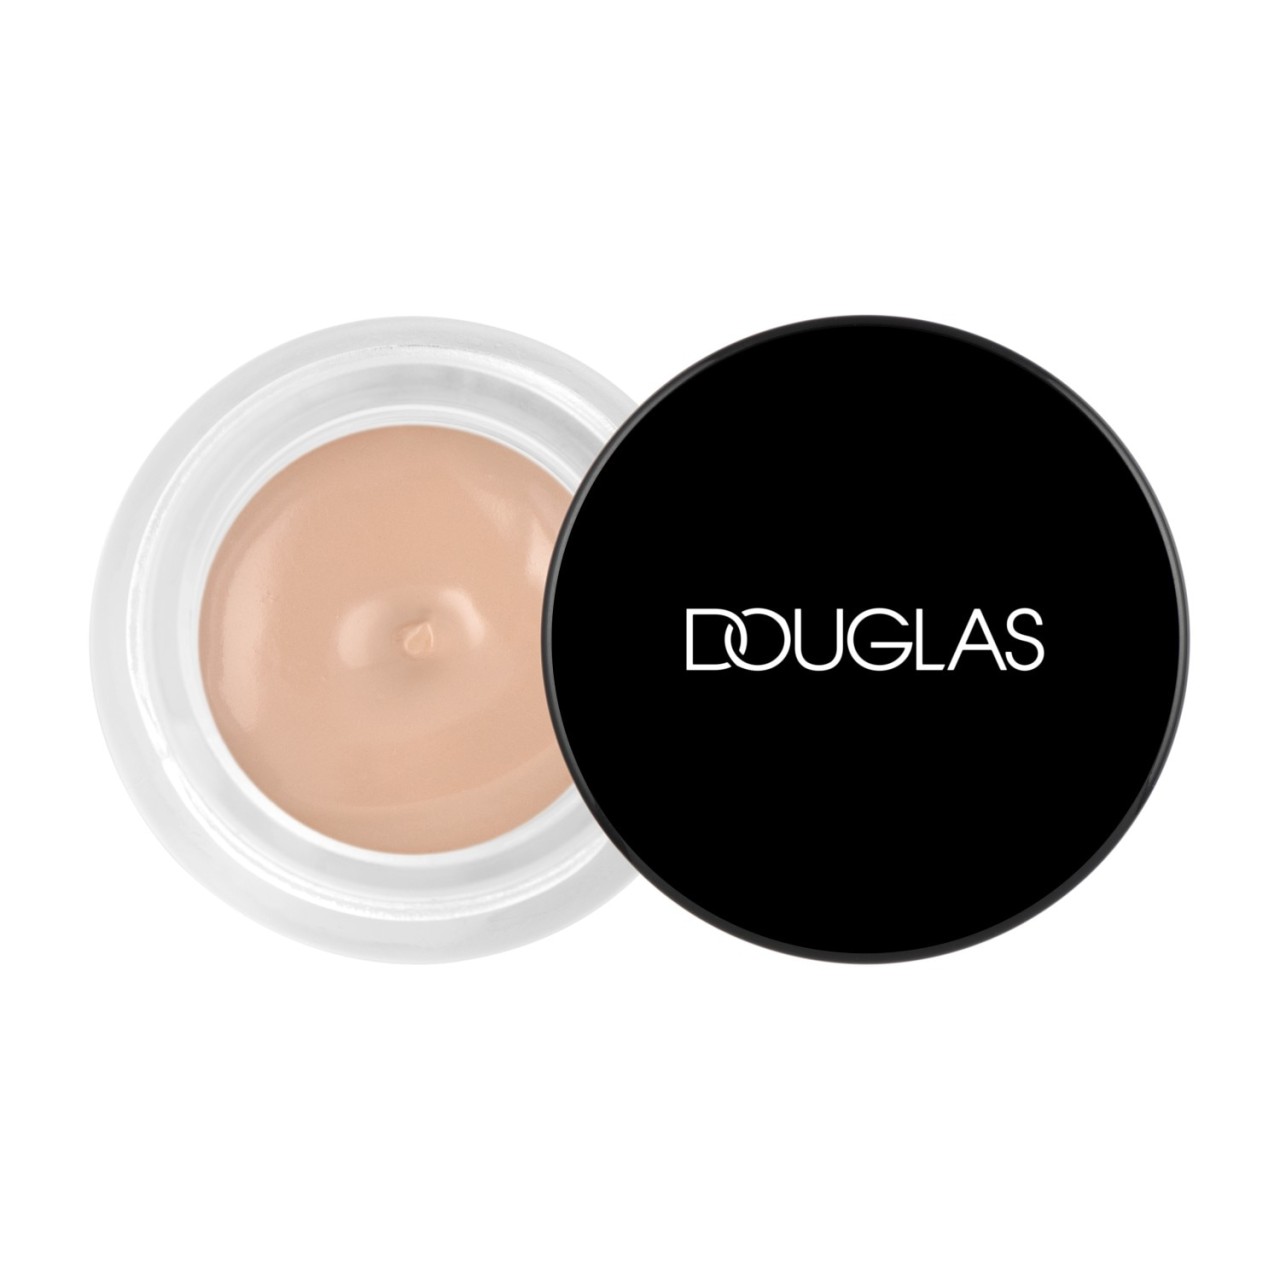 Douglas Collection - Eye Optimizing Full Coverage Concealer -  25